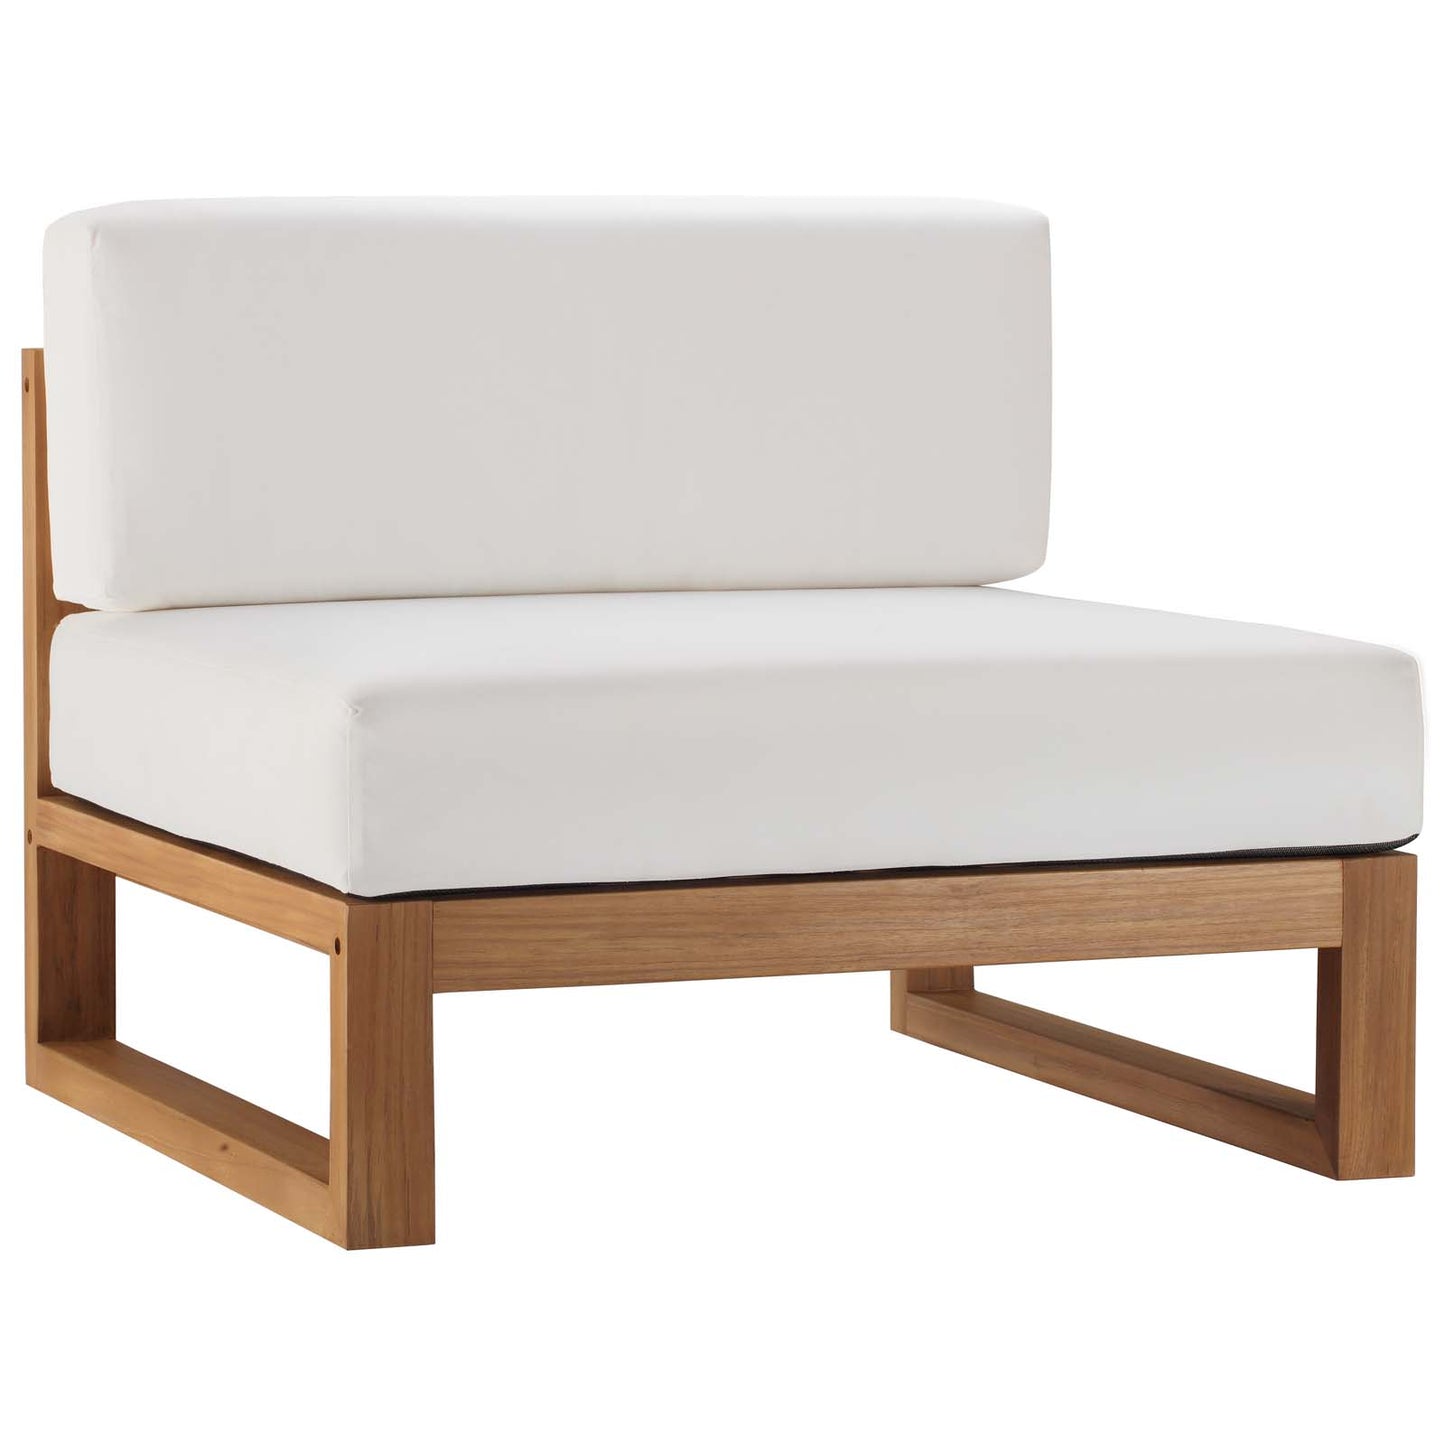 Upland Outdoor Patio Teak Wood 5-Piece Sectional Sofa Set Natural White EEI-4619-NAT-WHI-SET